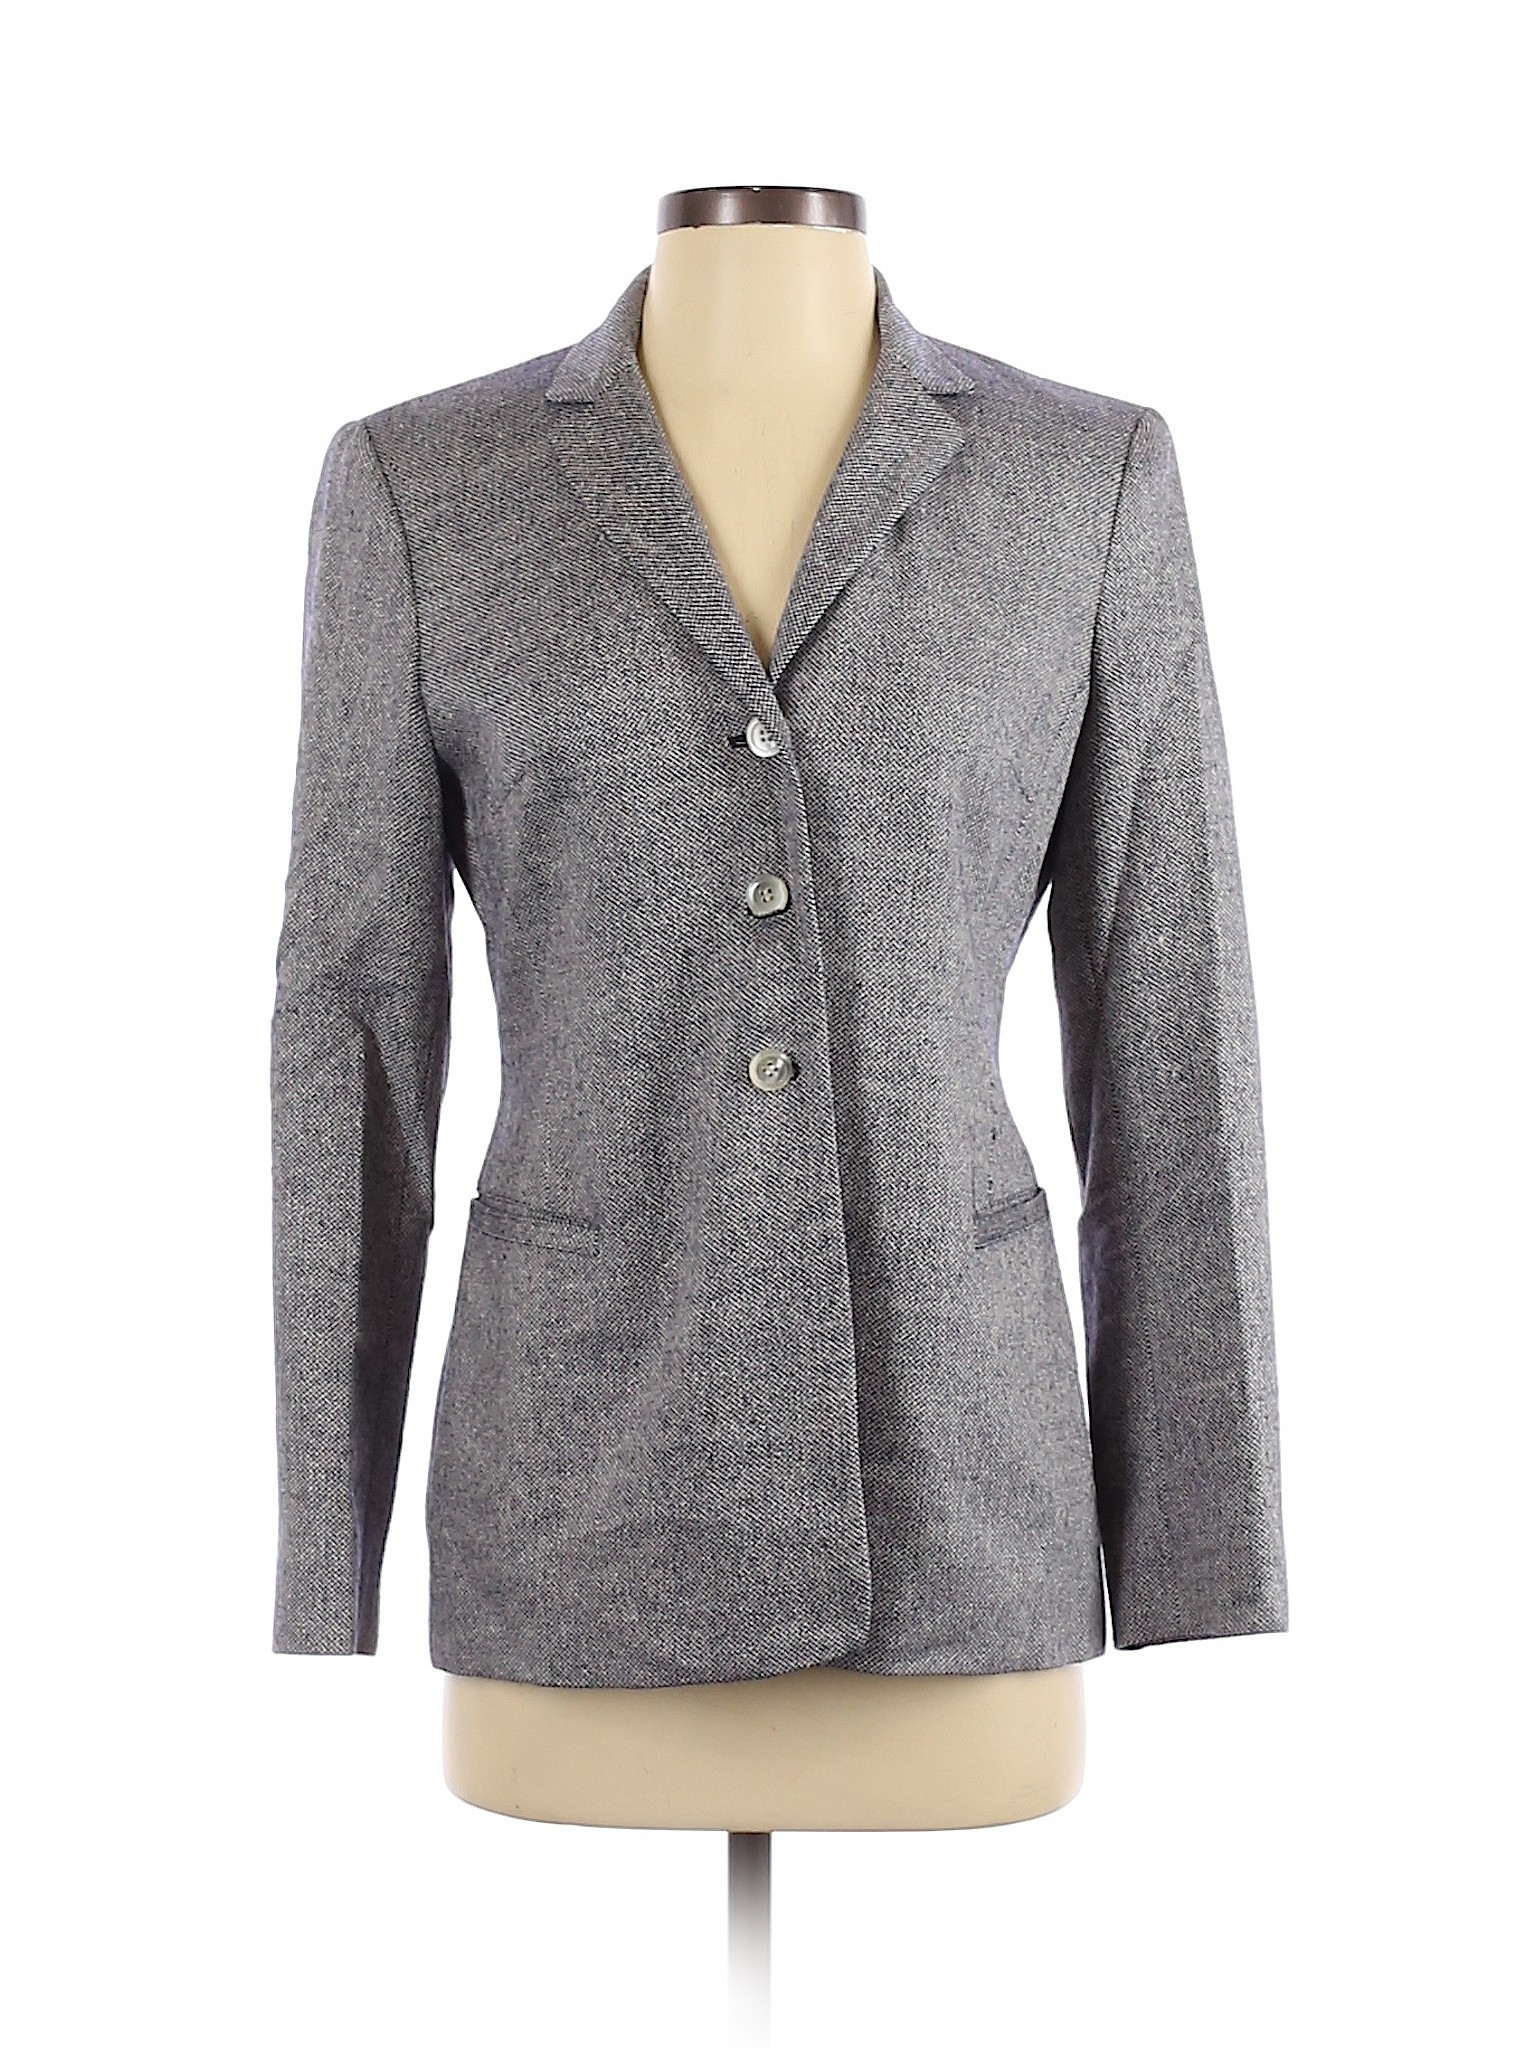 Jones New York Country Women Gray Silk Blazer 4 Petites | eBay